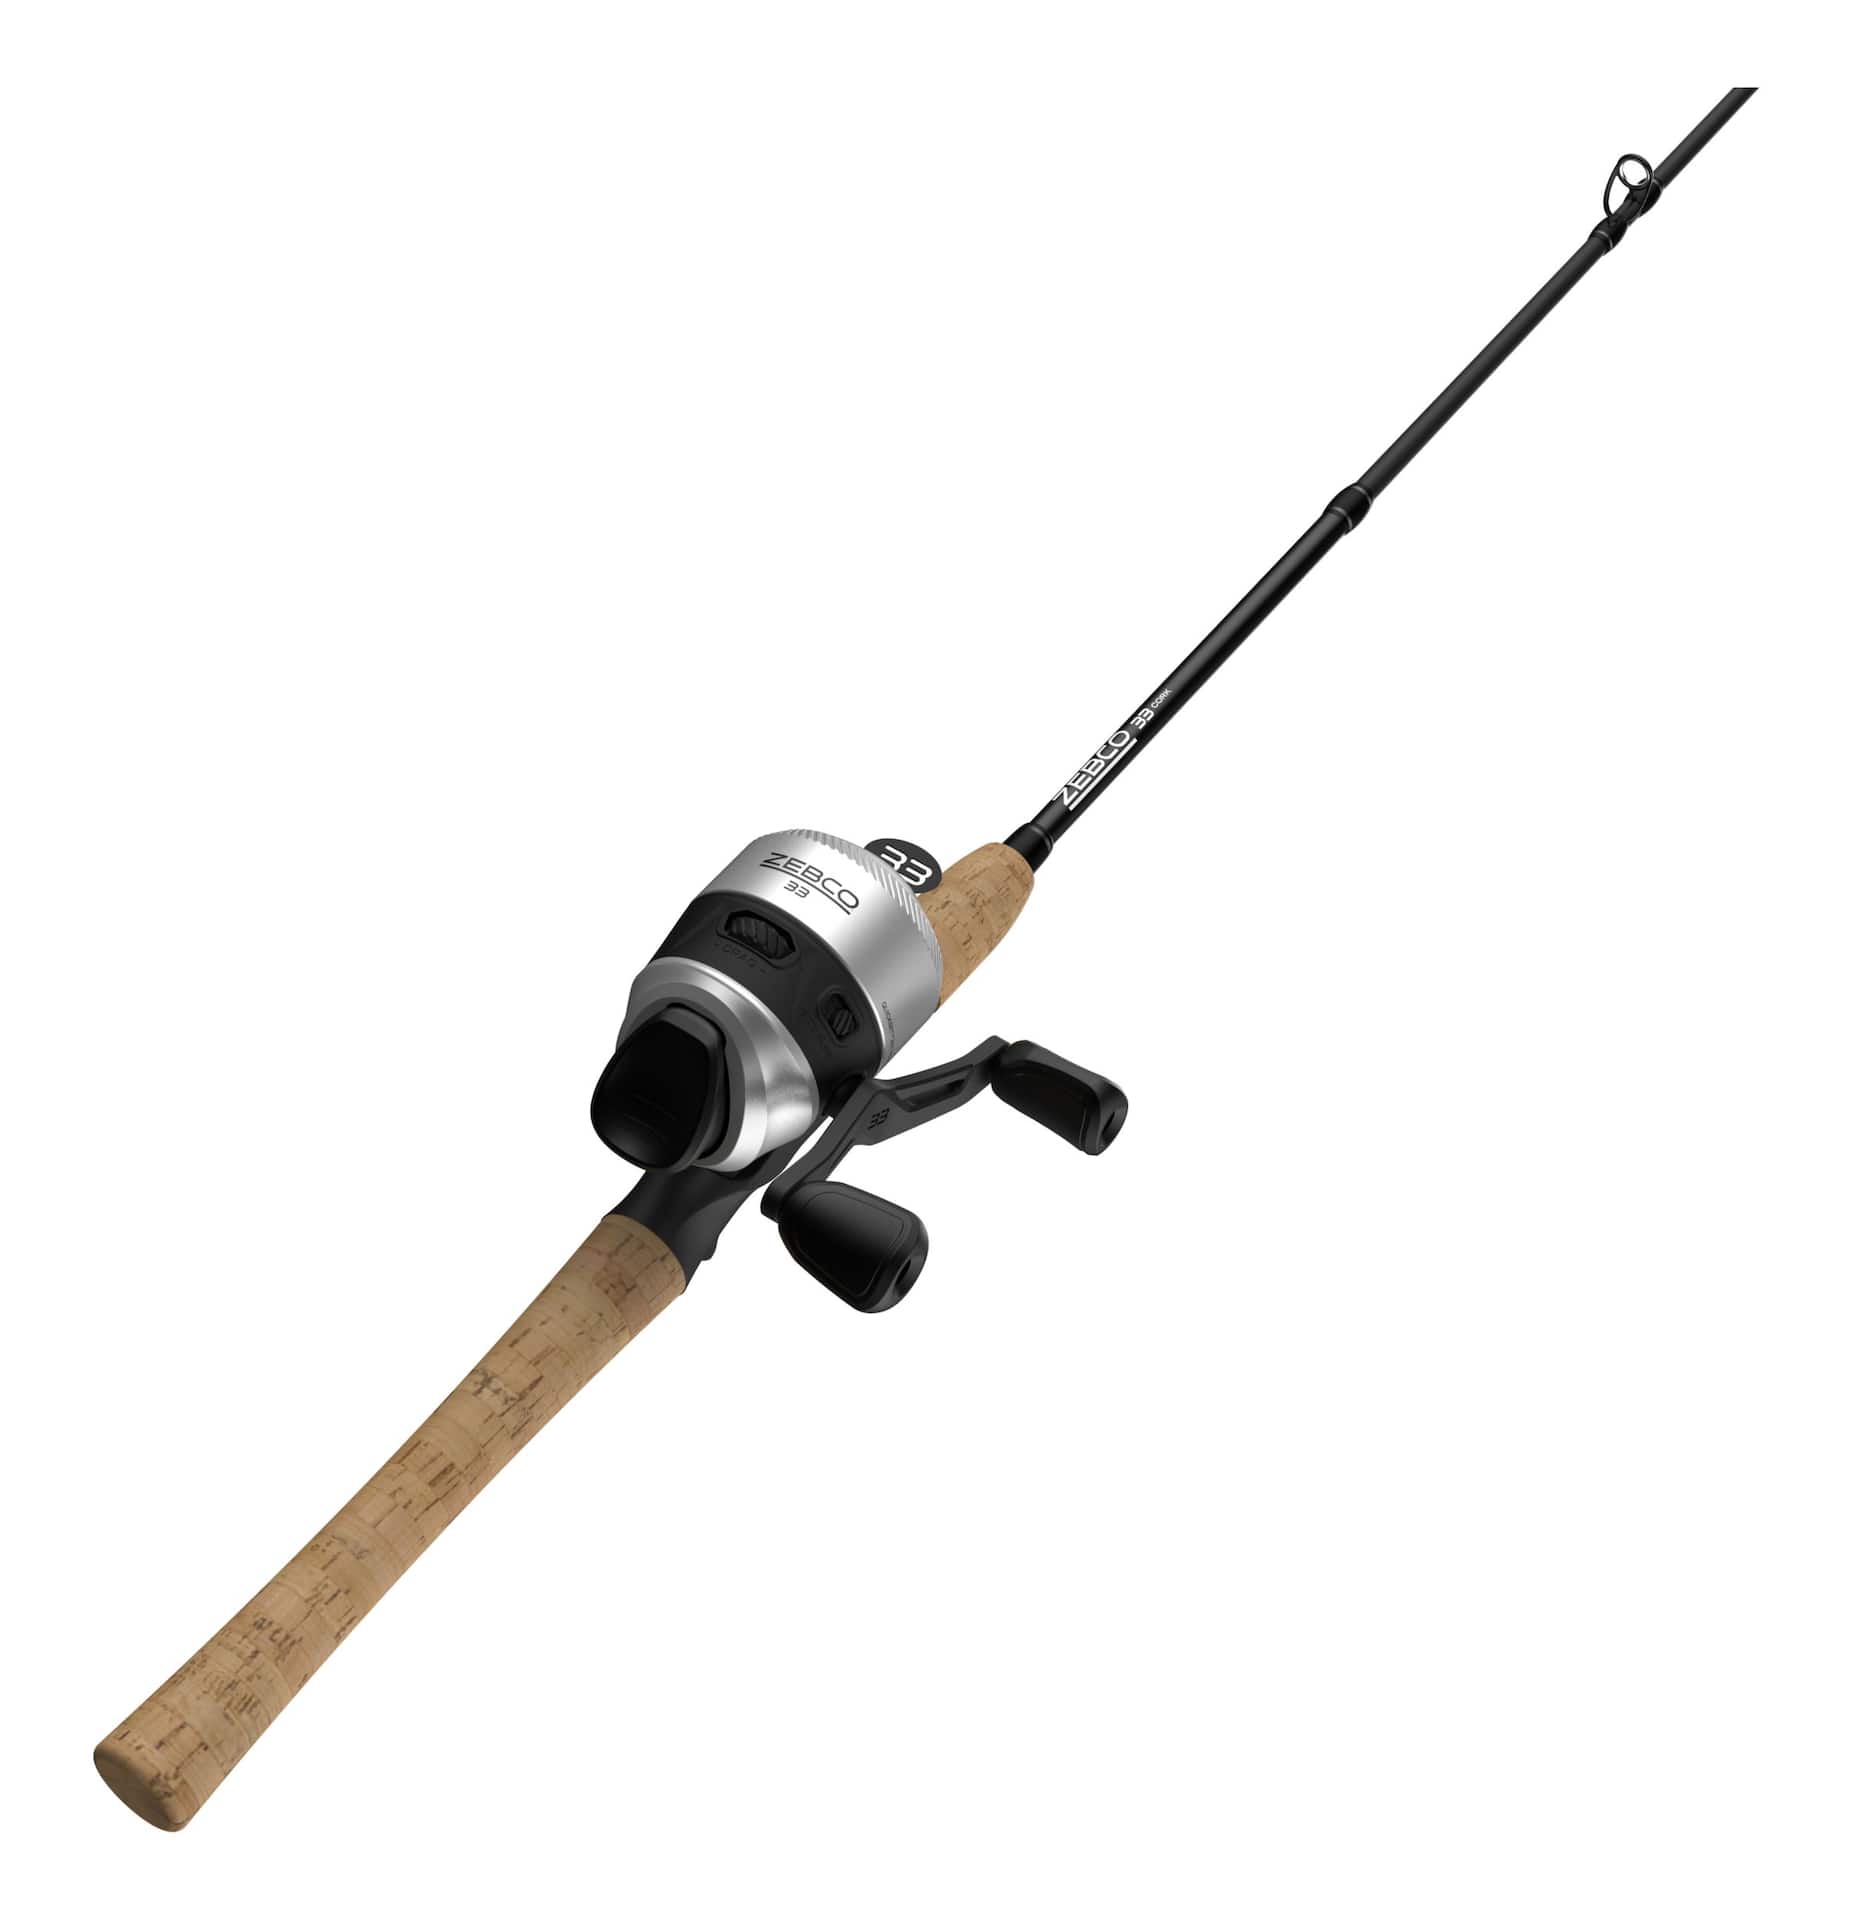 52cm Casting Fishing Rod Antiskid Grip Fishing Pole with Reel